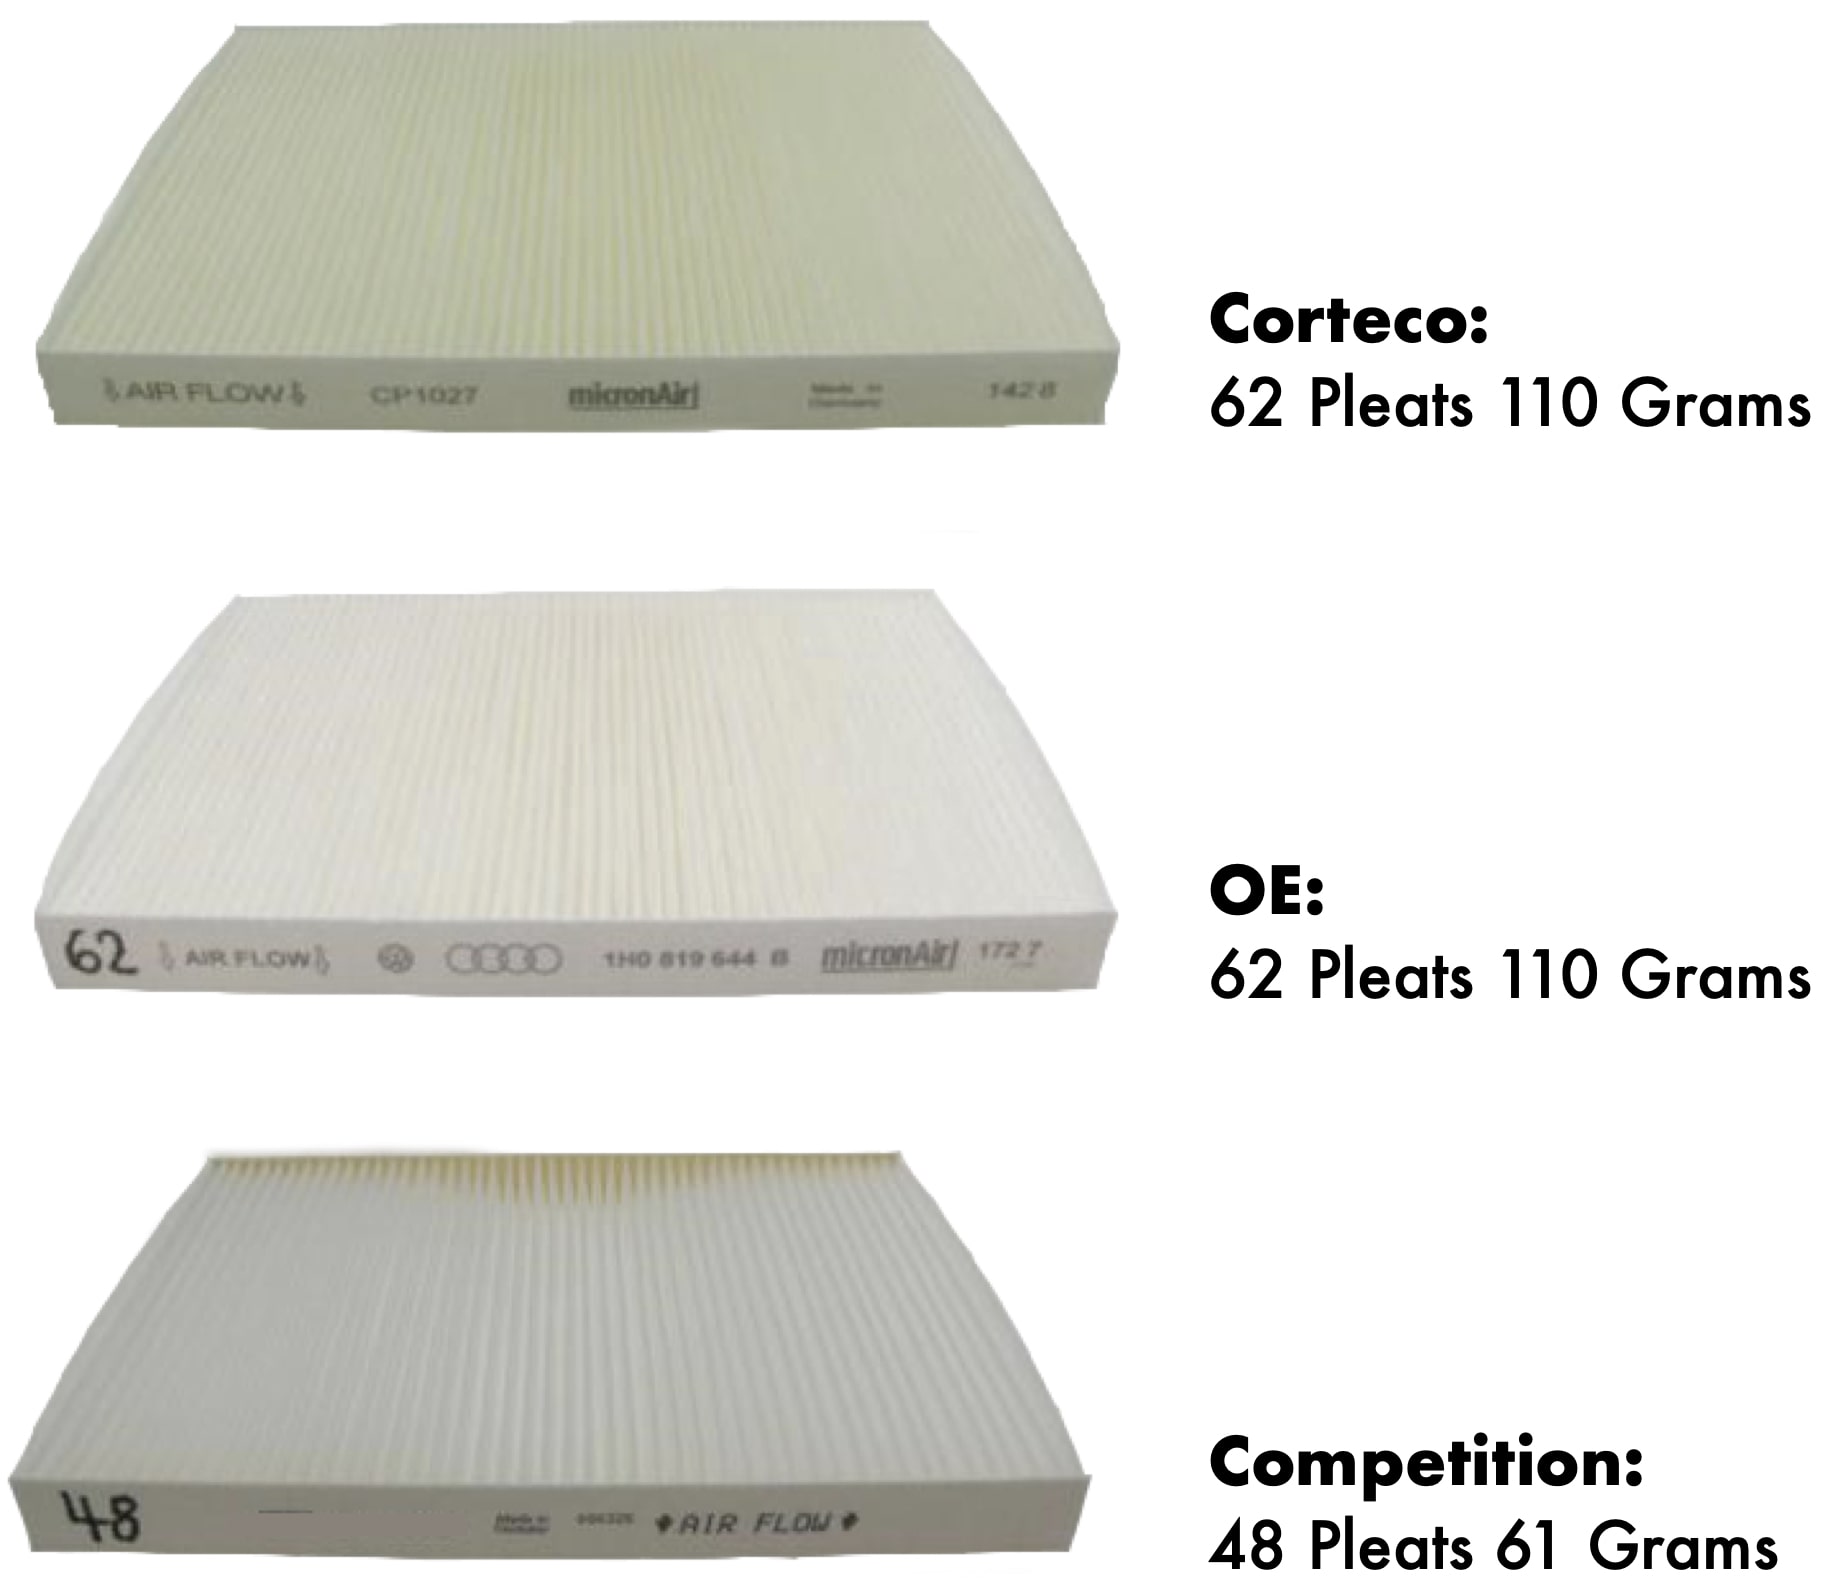 Corteco cabin air filters vs. competition